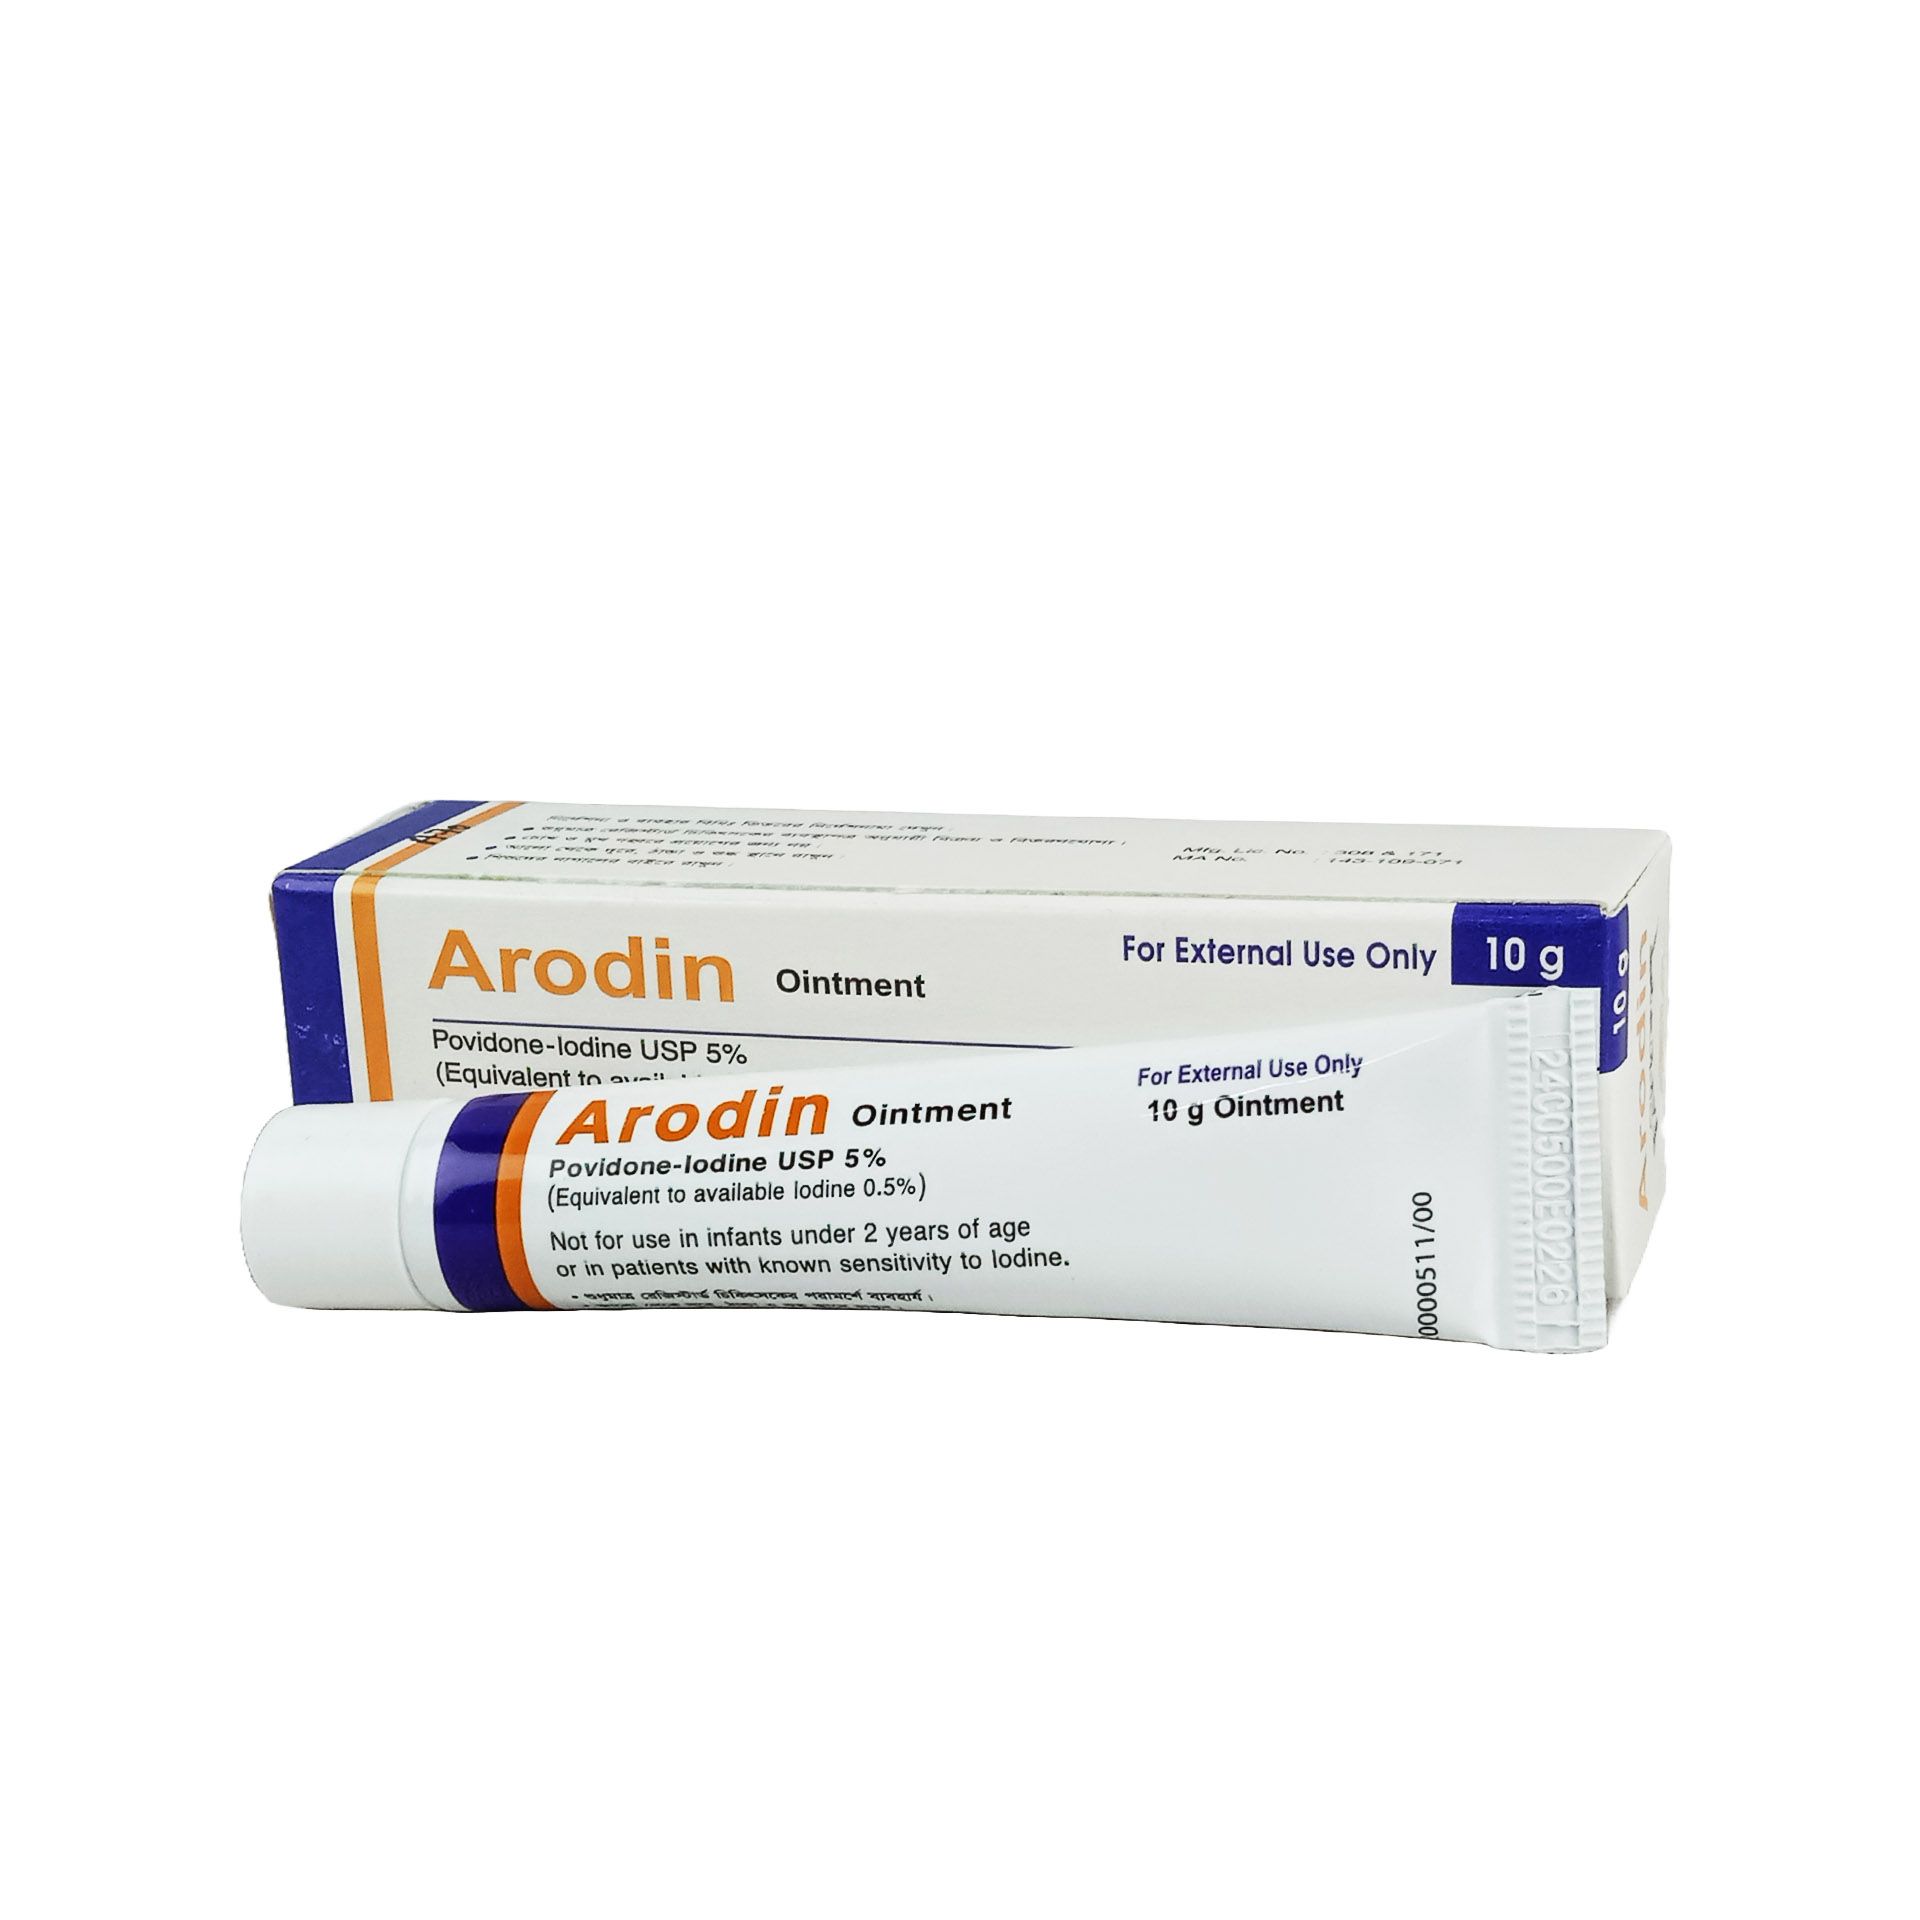 Arodin 5% Ointment